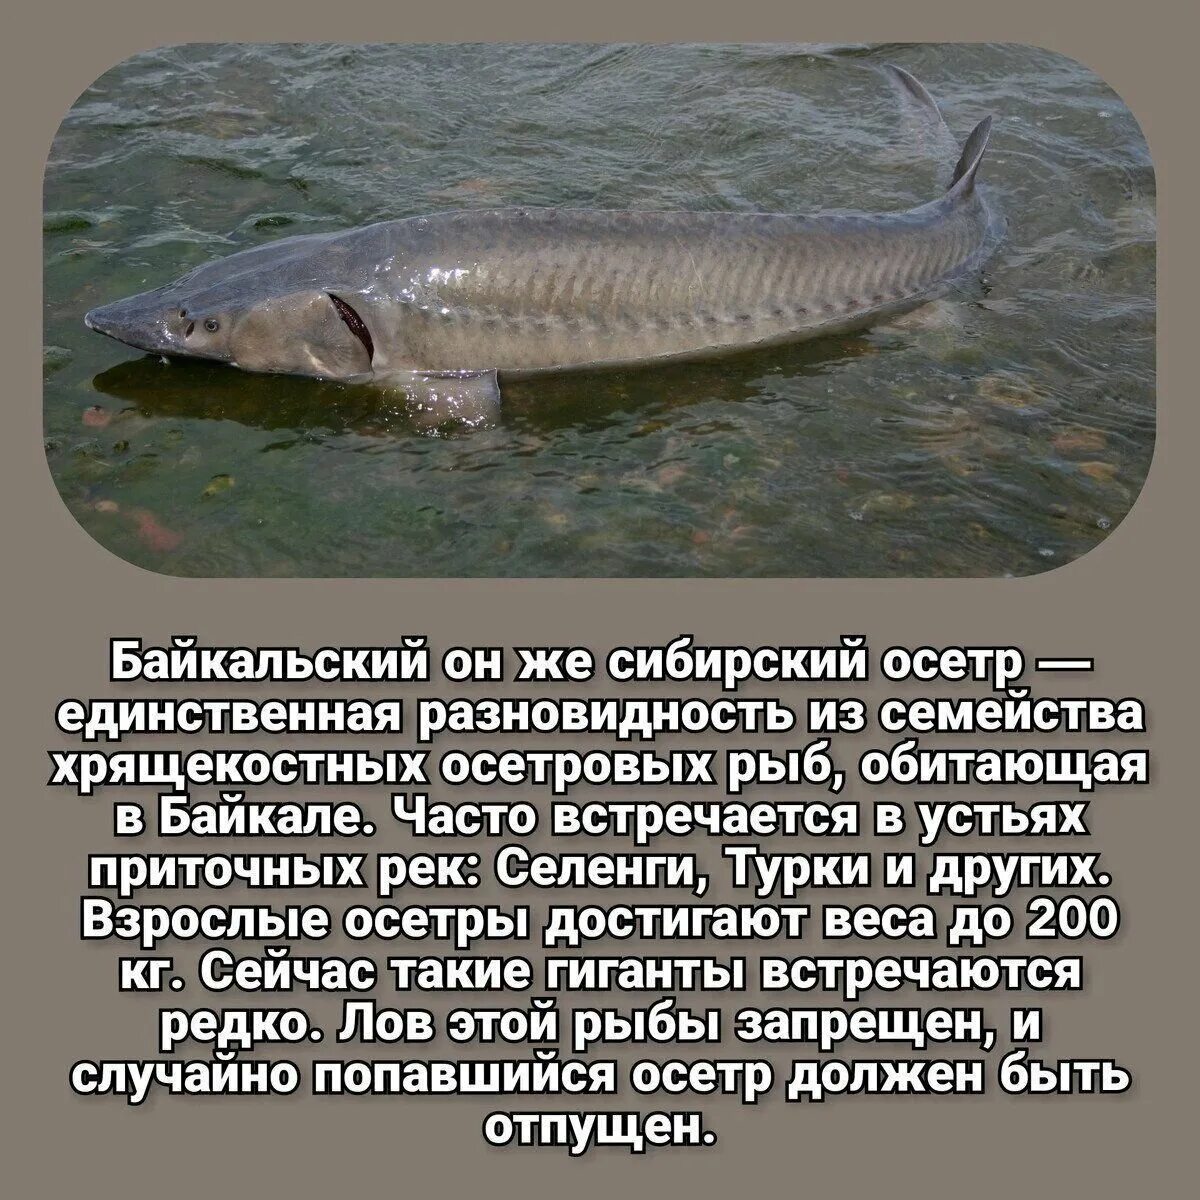 Самые большие рыбы Байкала. Крупная рыба Байкала. Самая большая рыба в Байкале. Самая крупная рыба Байкала.